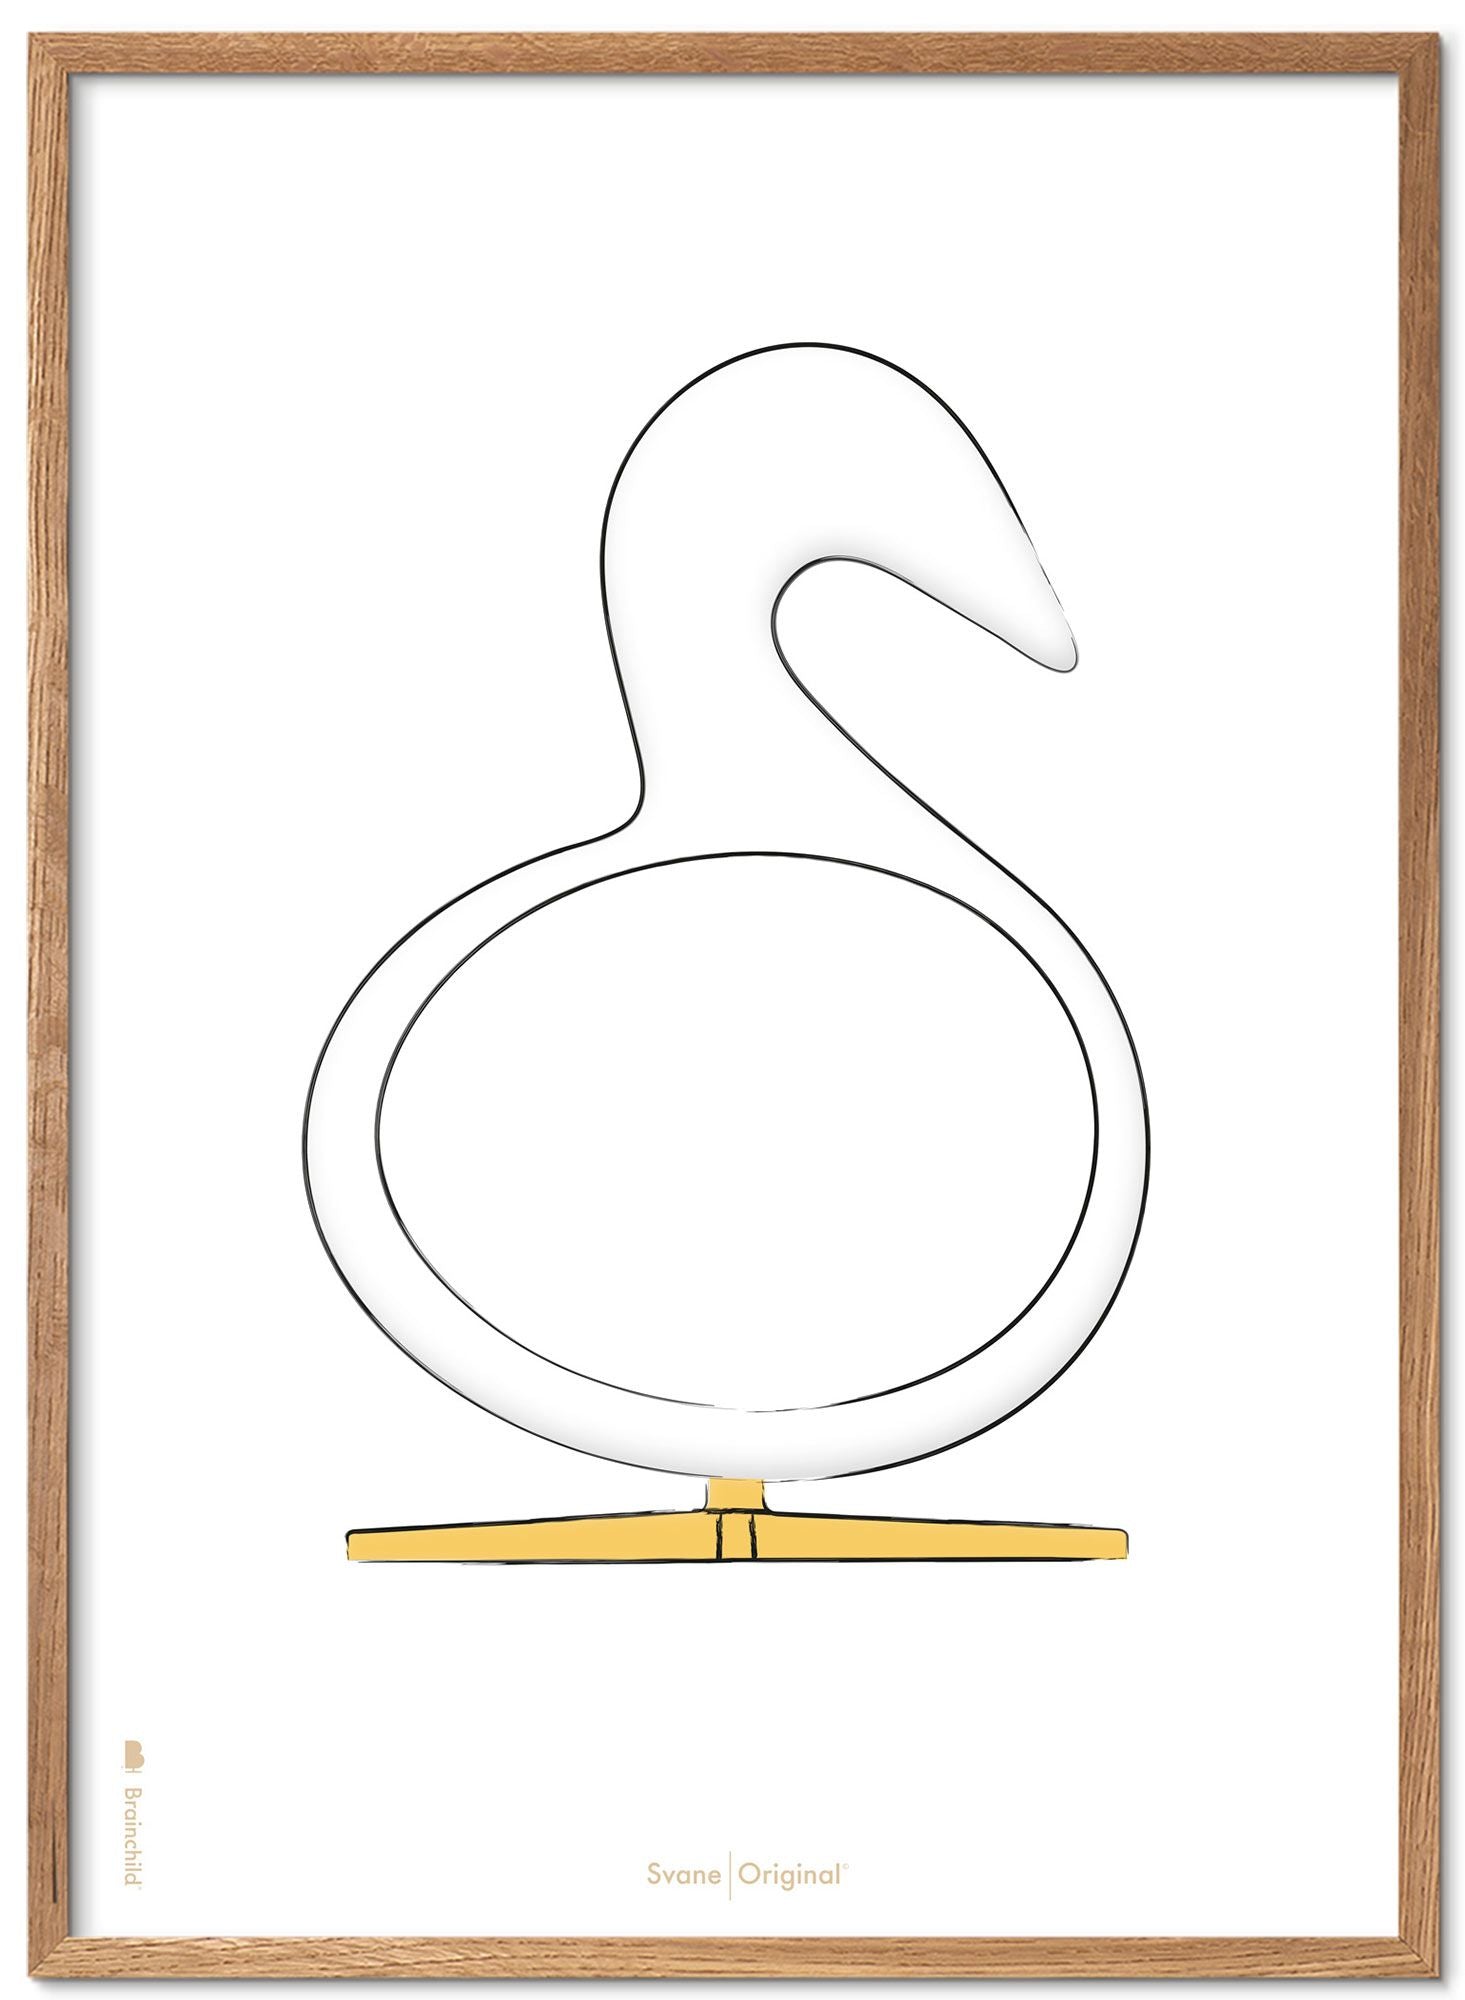 Brainchild Swan Design Sketch Poster Frame Made Of Light Wood 30x40 Cm, White Background